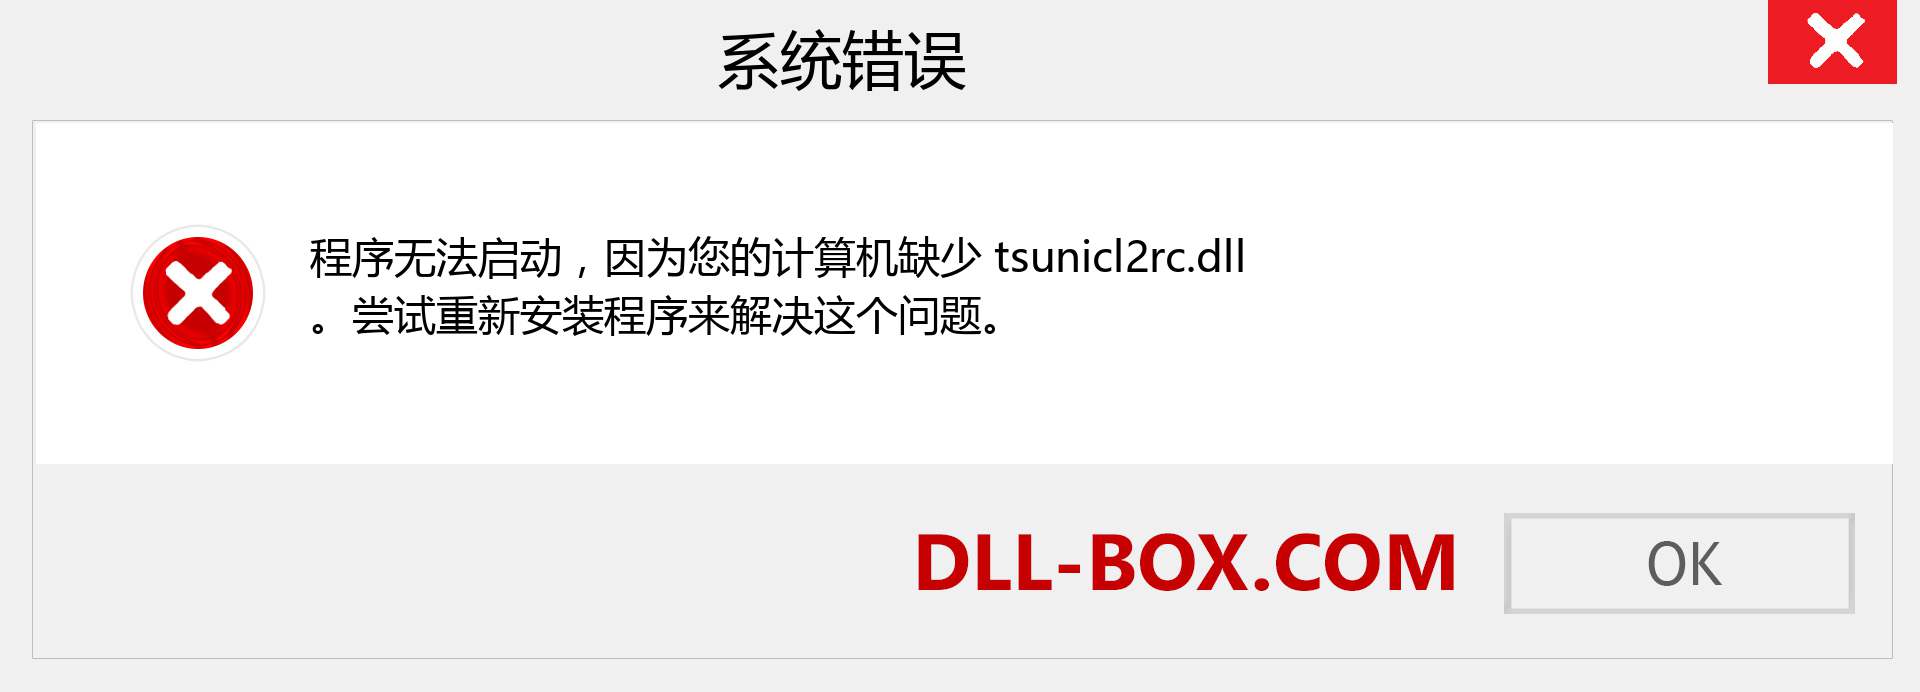 tsunicl2rc.dll 文件丢失？。 适用于 Windows 7、8、10 的下载 - 修复 Windows、照片、图像上的 tsunicl2rc dll 丢失错误